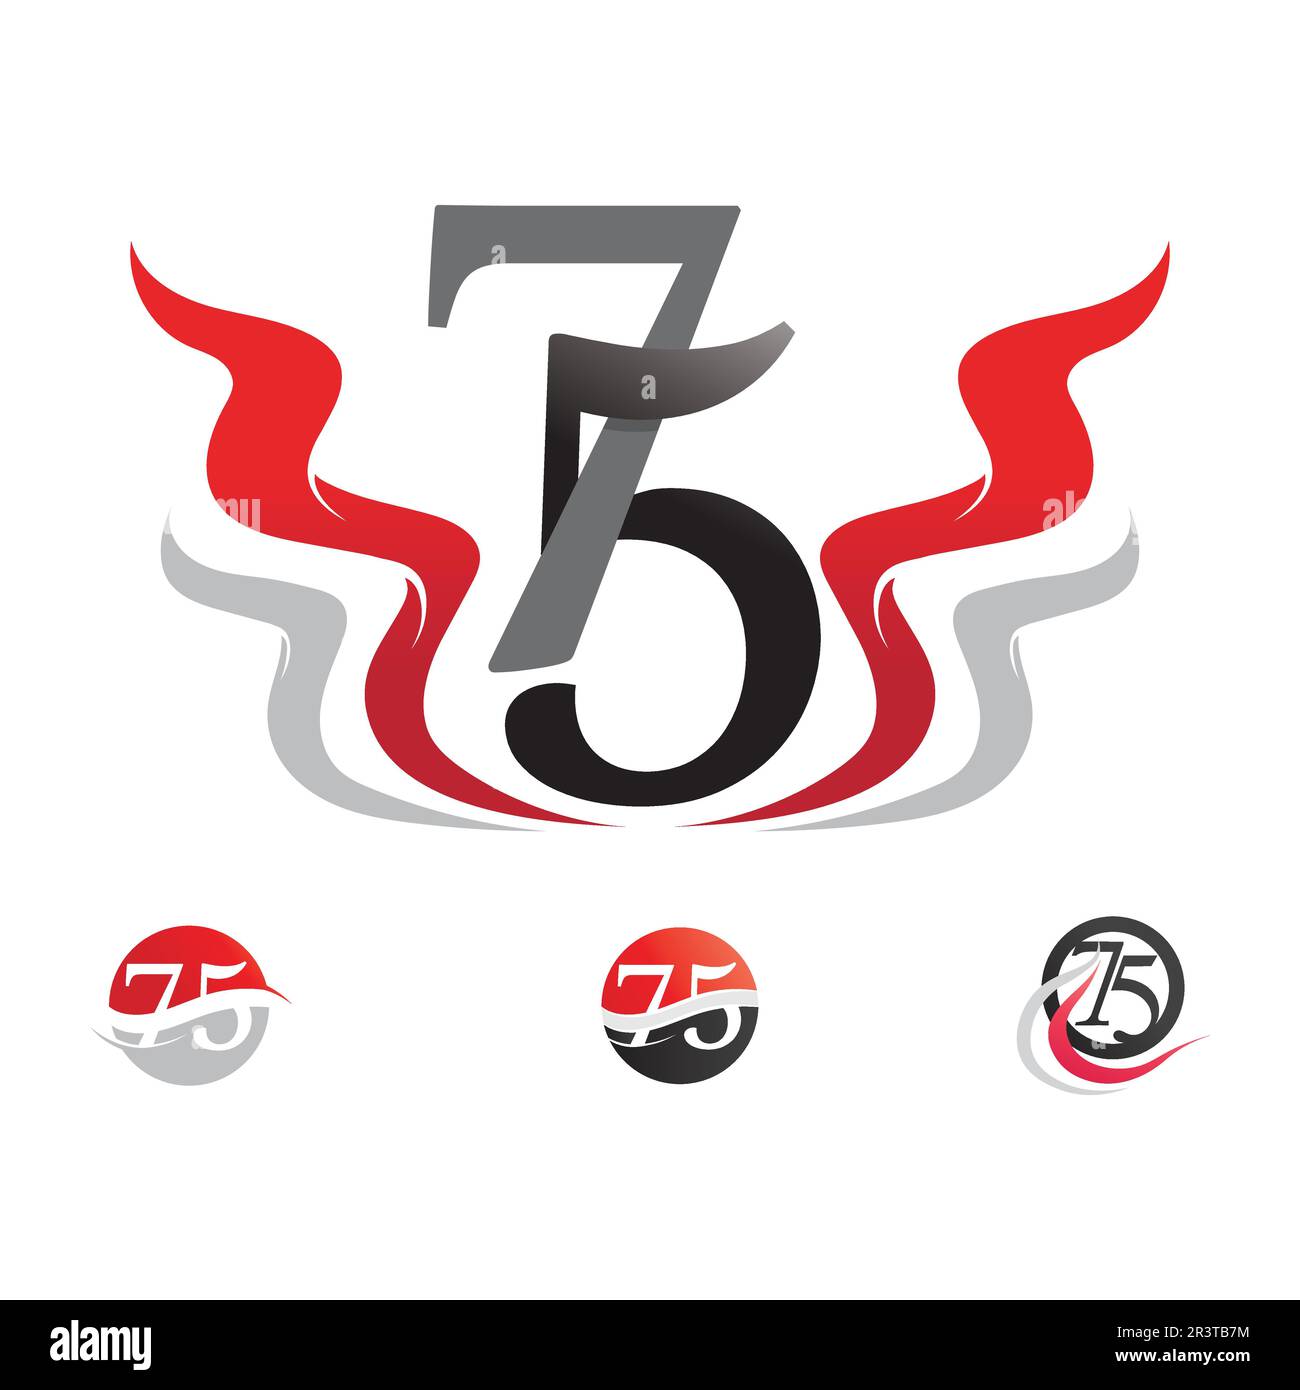 number 75 icon set logo design vector Stock Vector